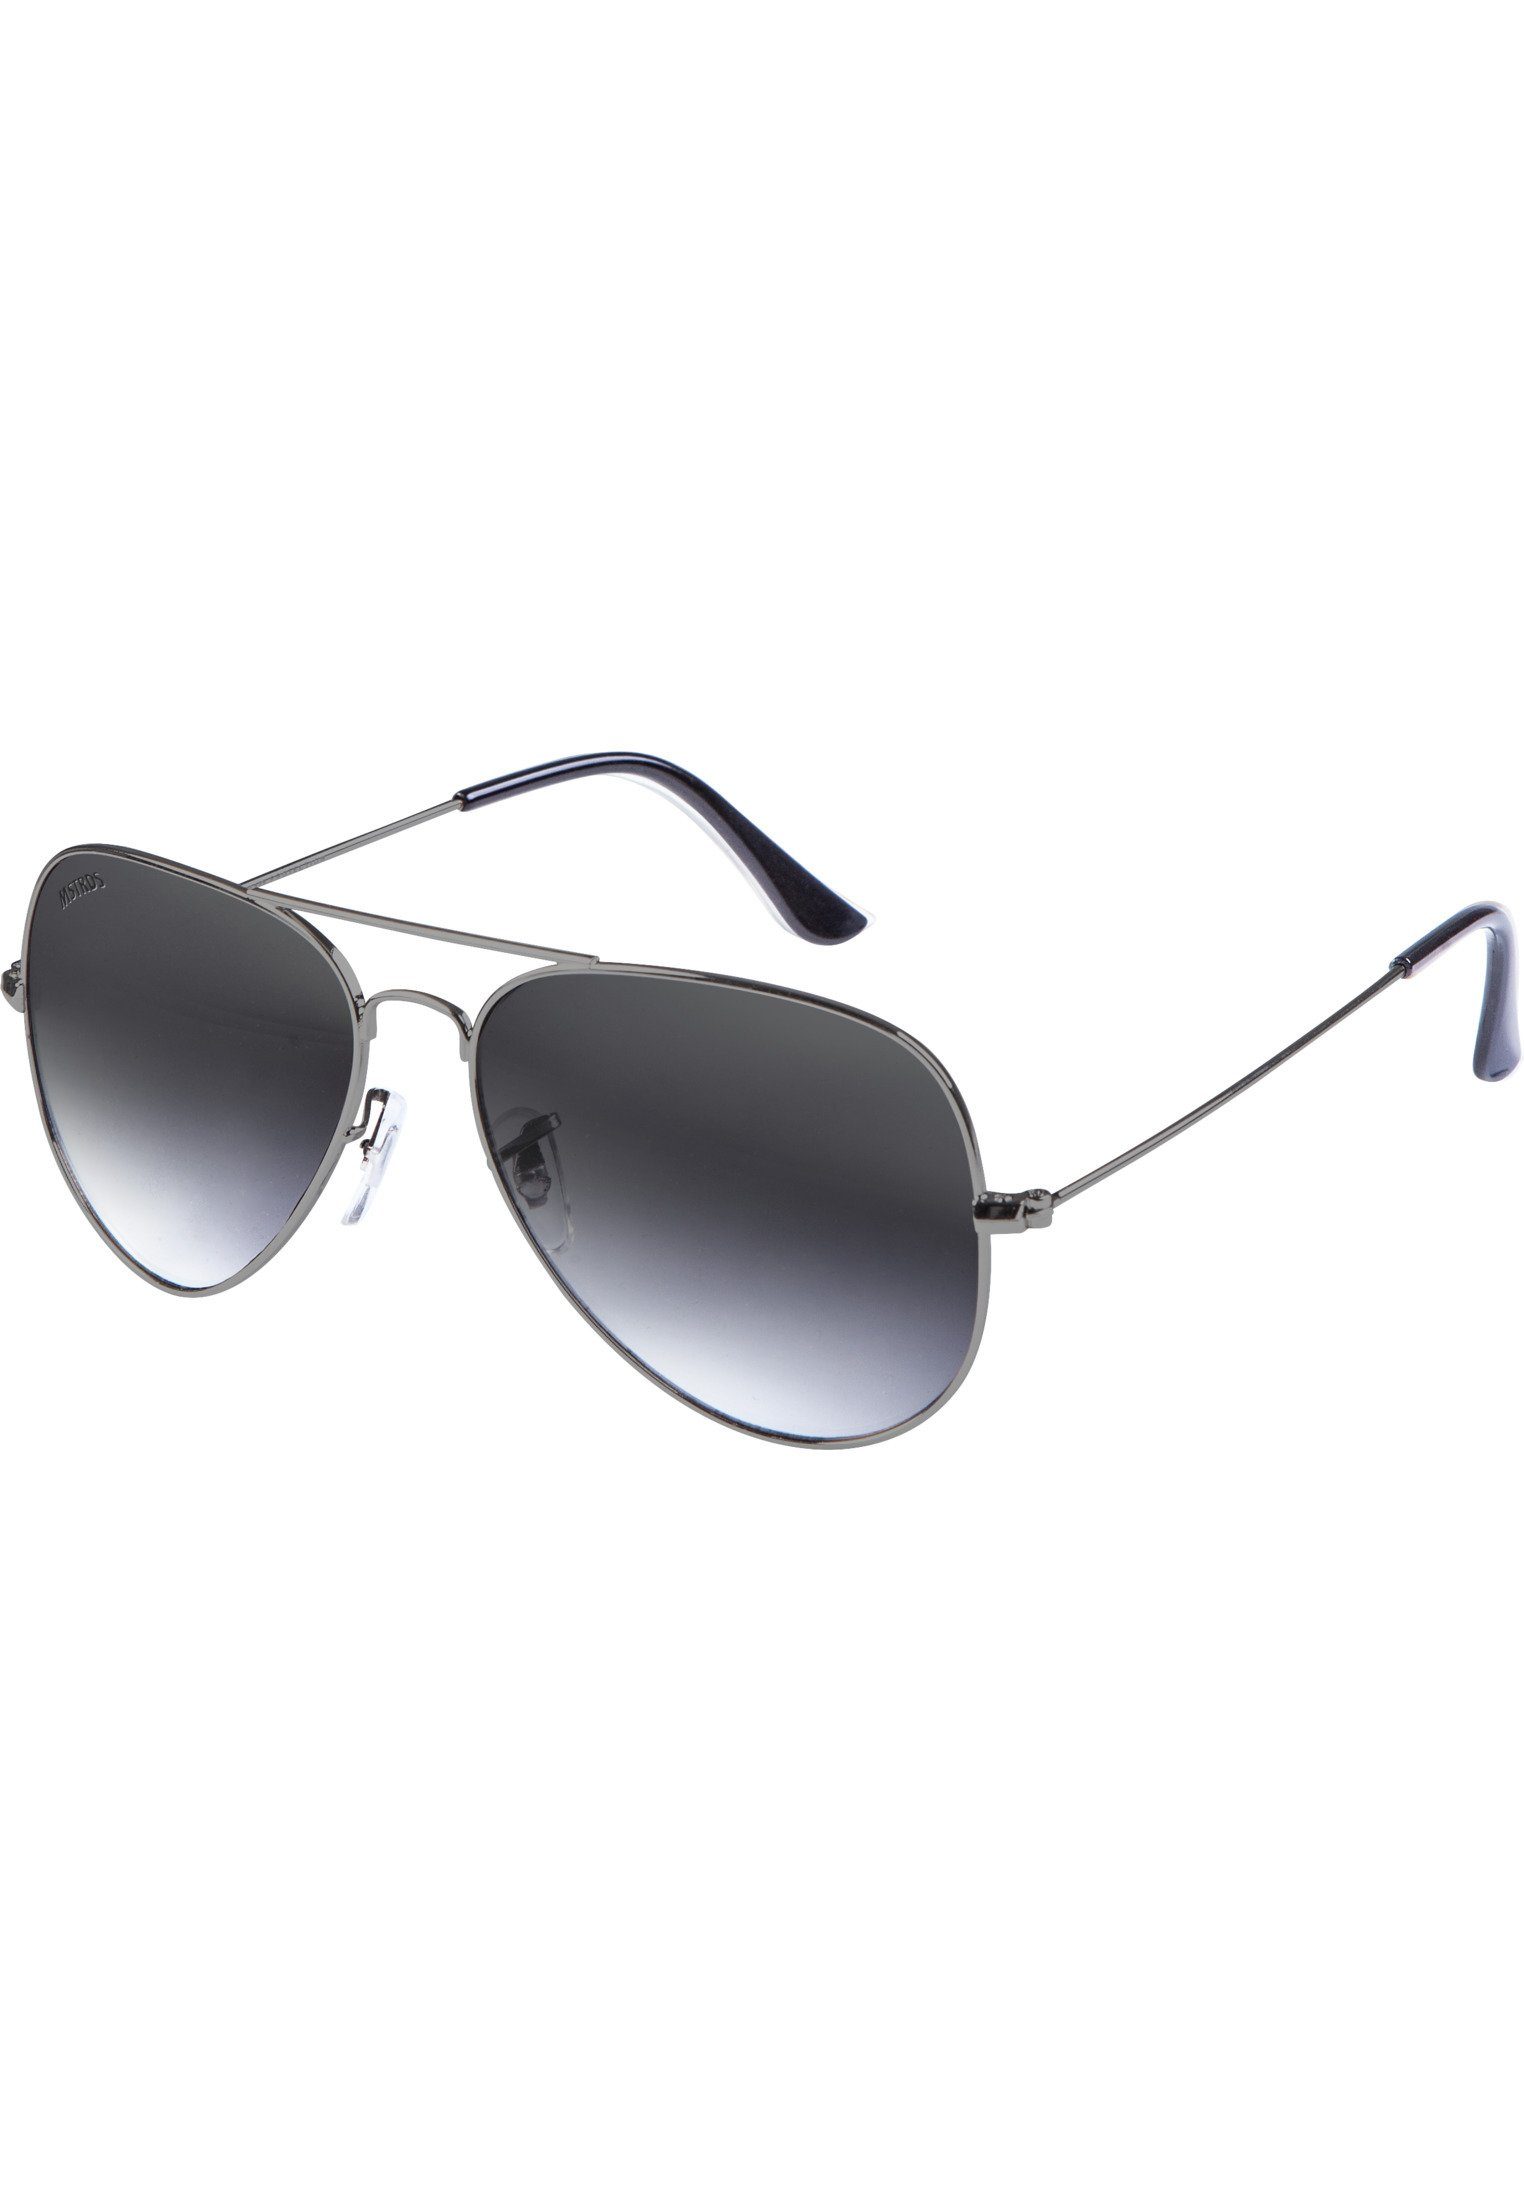 MSTRDS Sonnenbrille Accessoires gun/grey Sunglasses PureAv